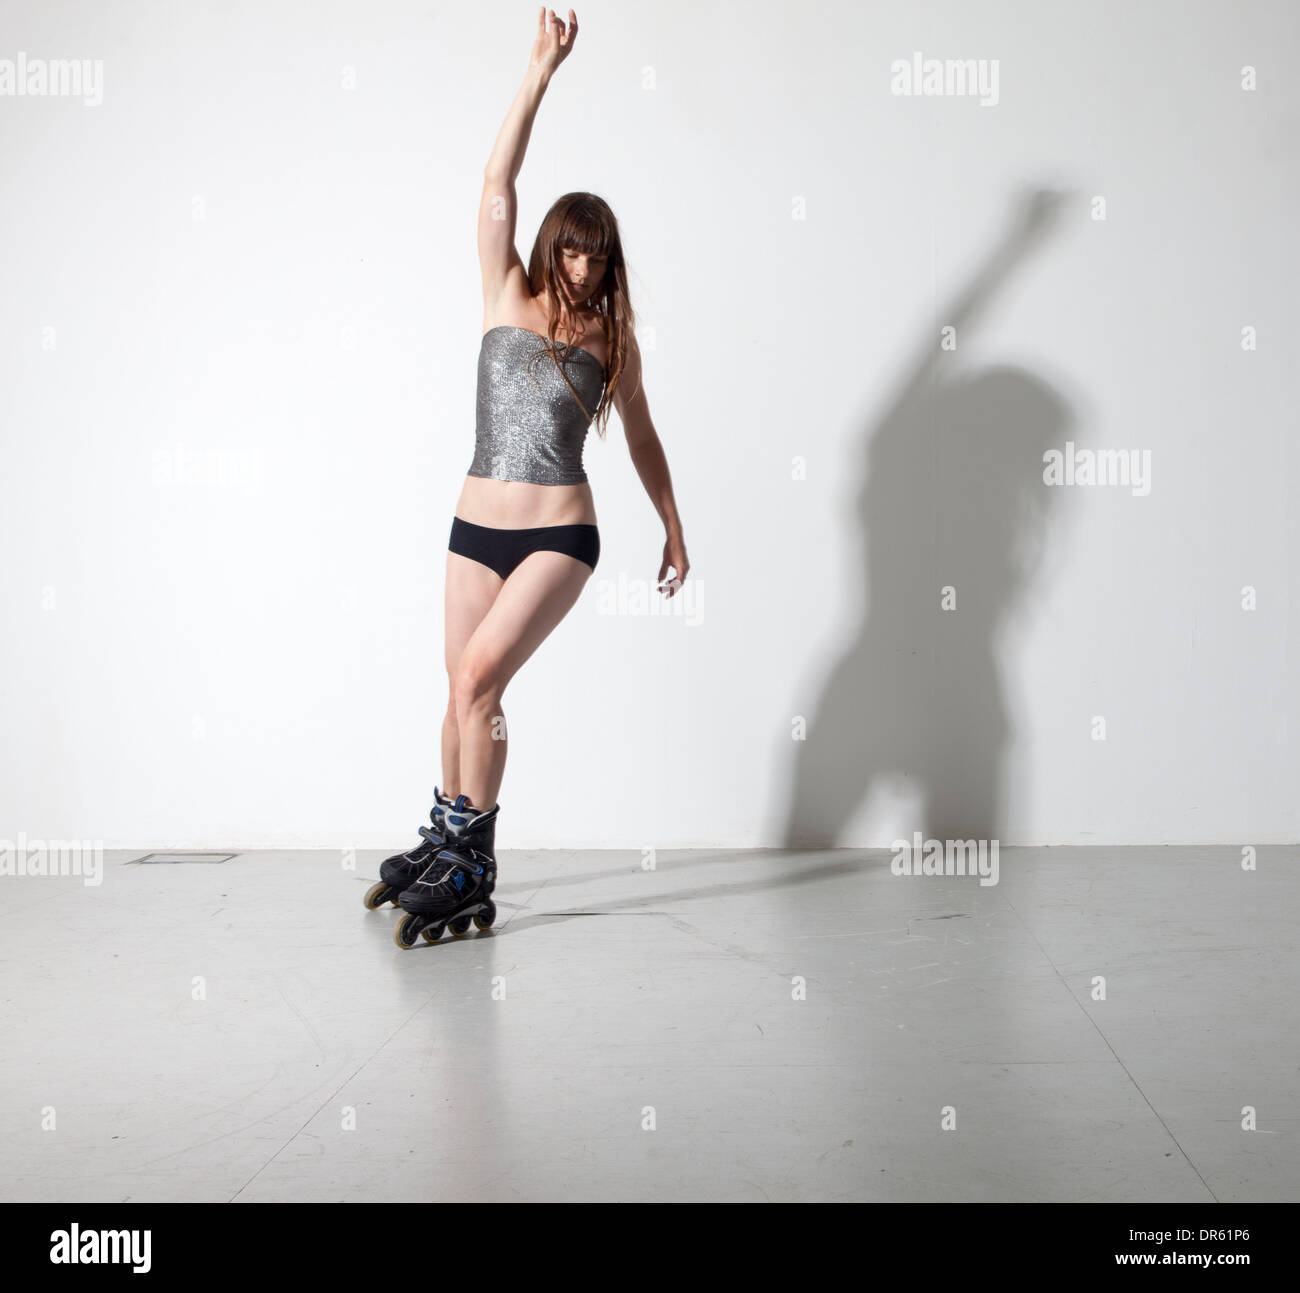 woman roller blading, long hair, skating , silver top, arm up, shadow Stock Photo